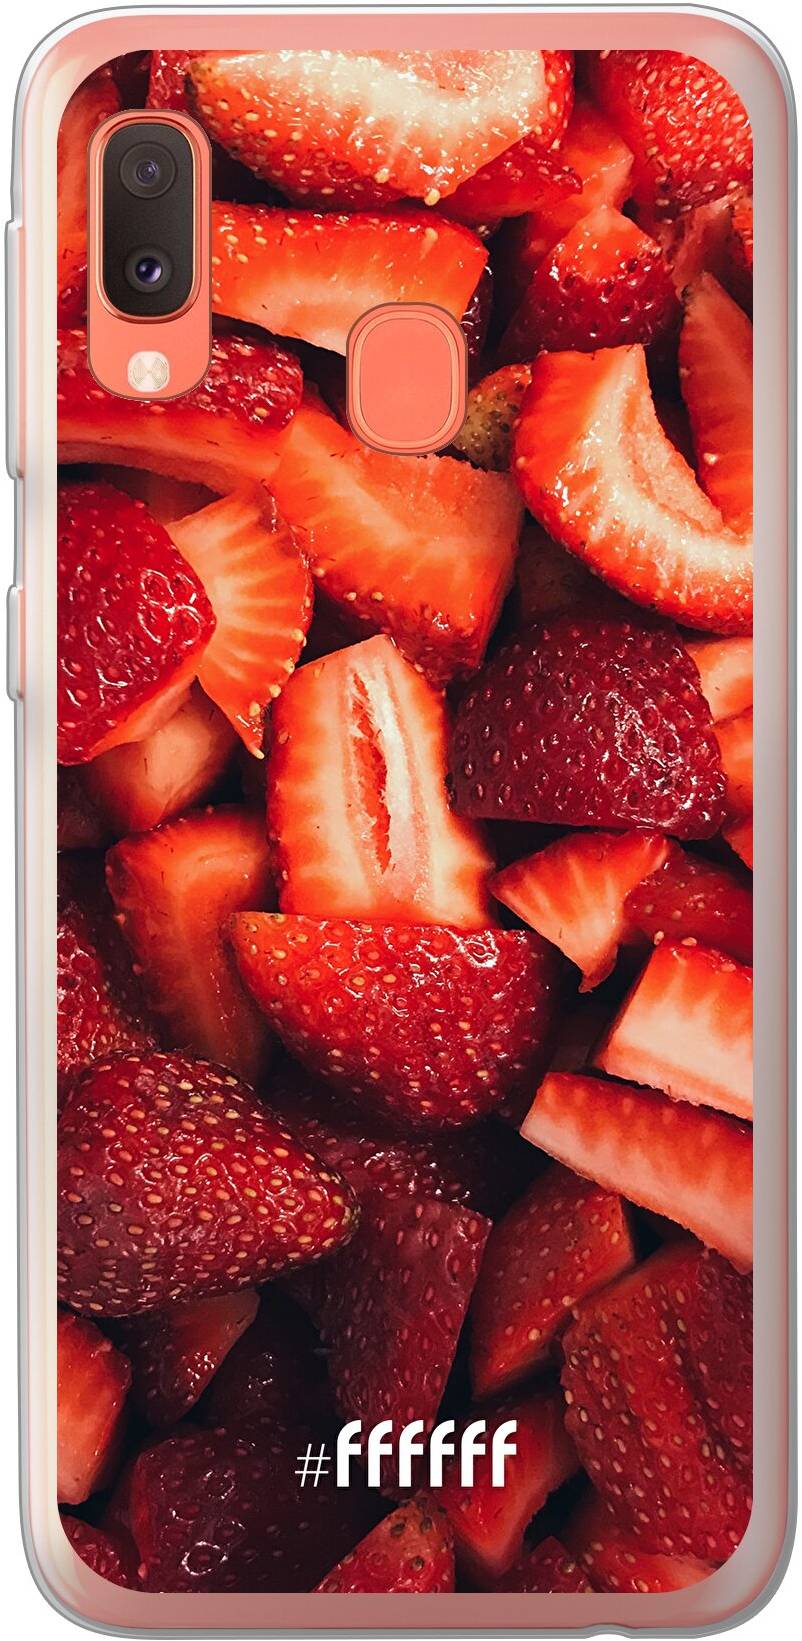 Strawberry Fields Galaxy A20e